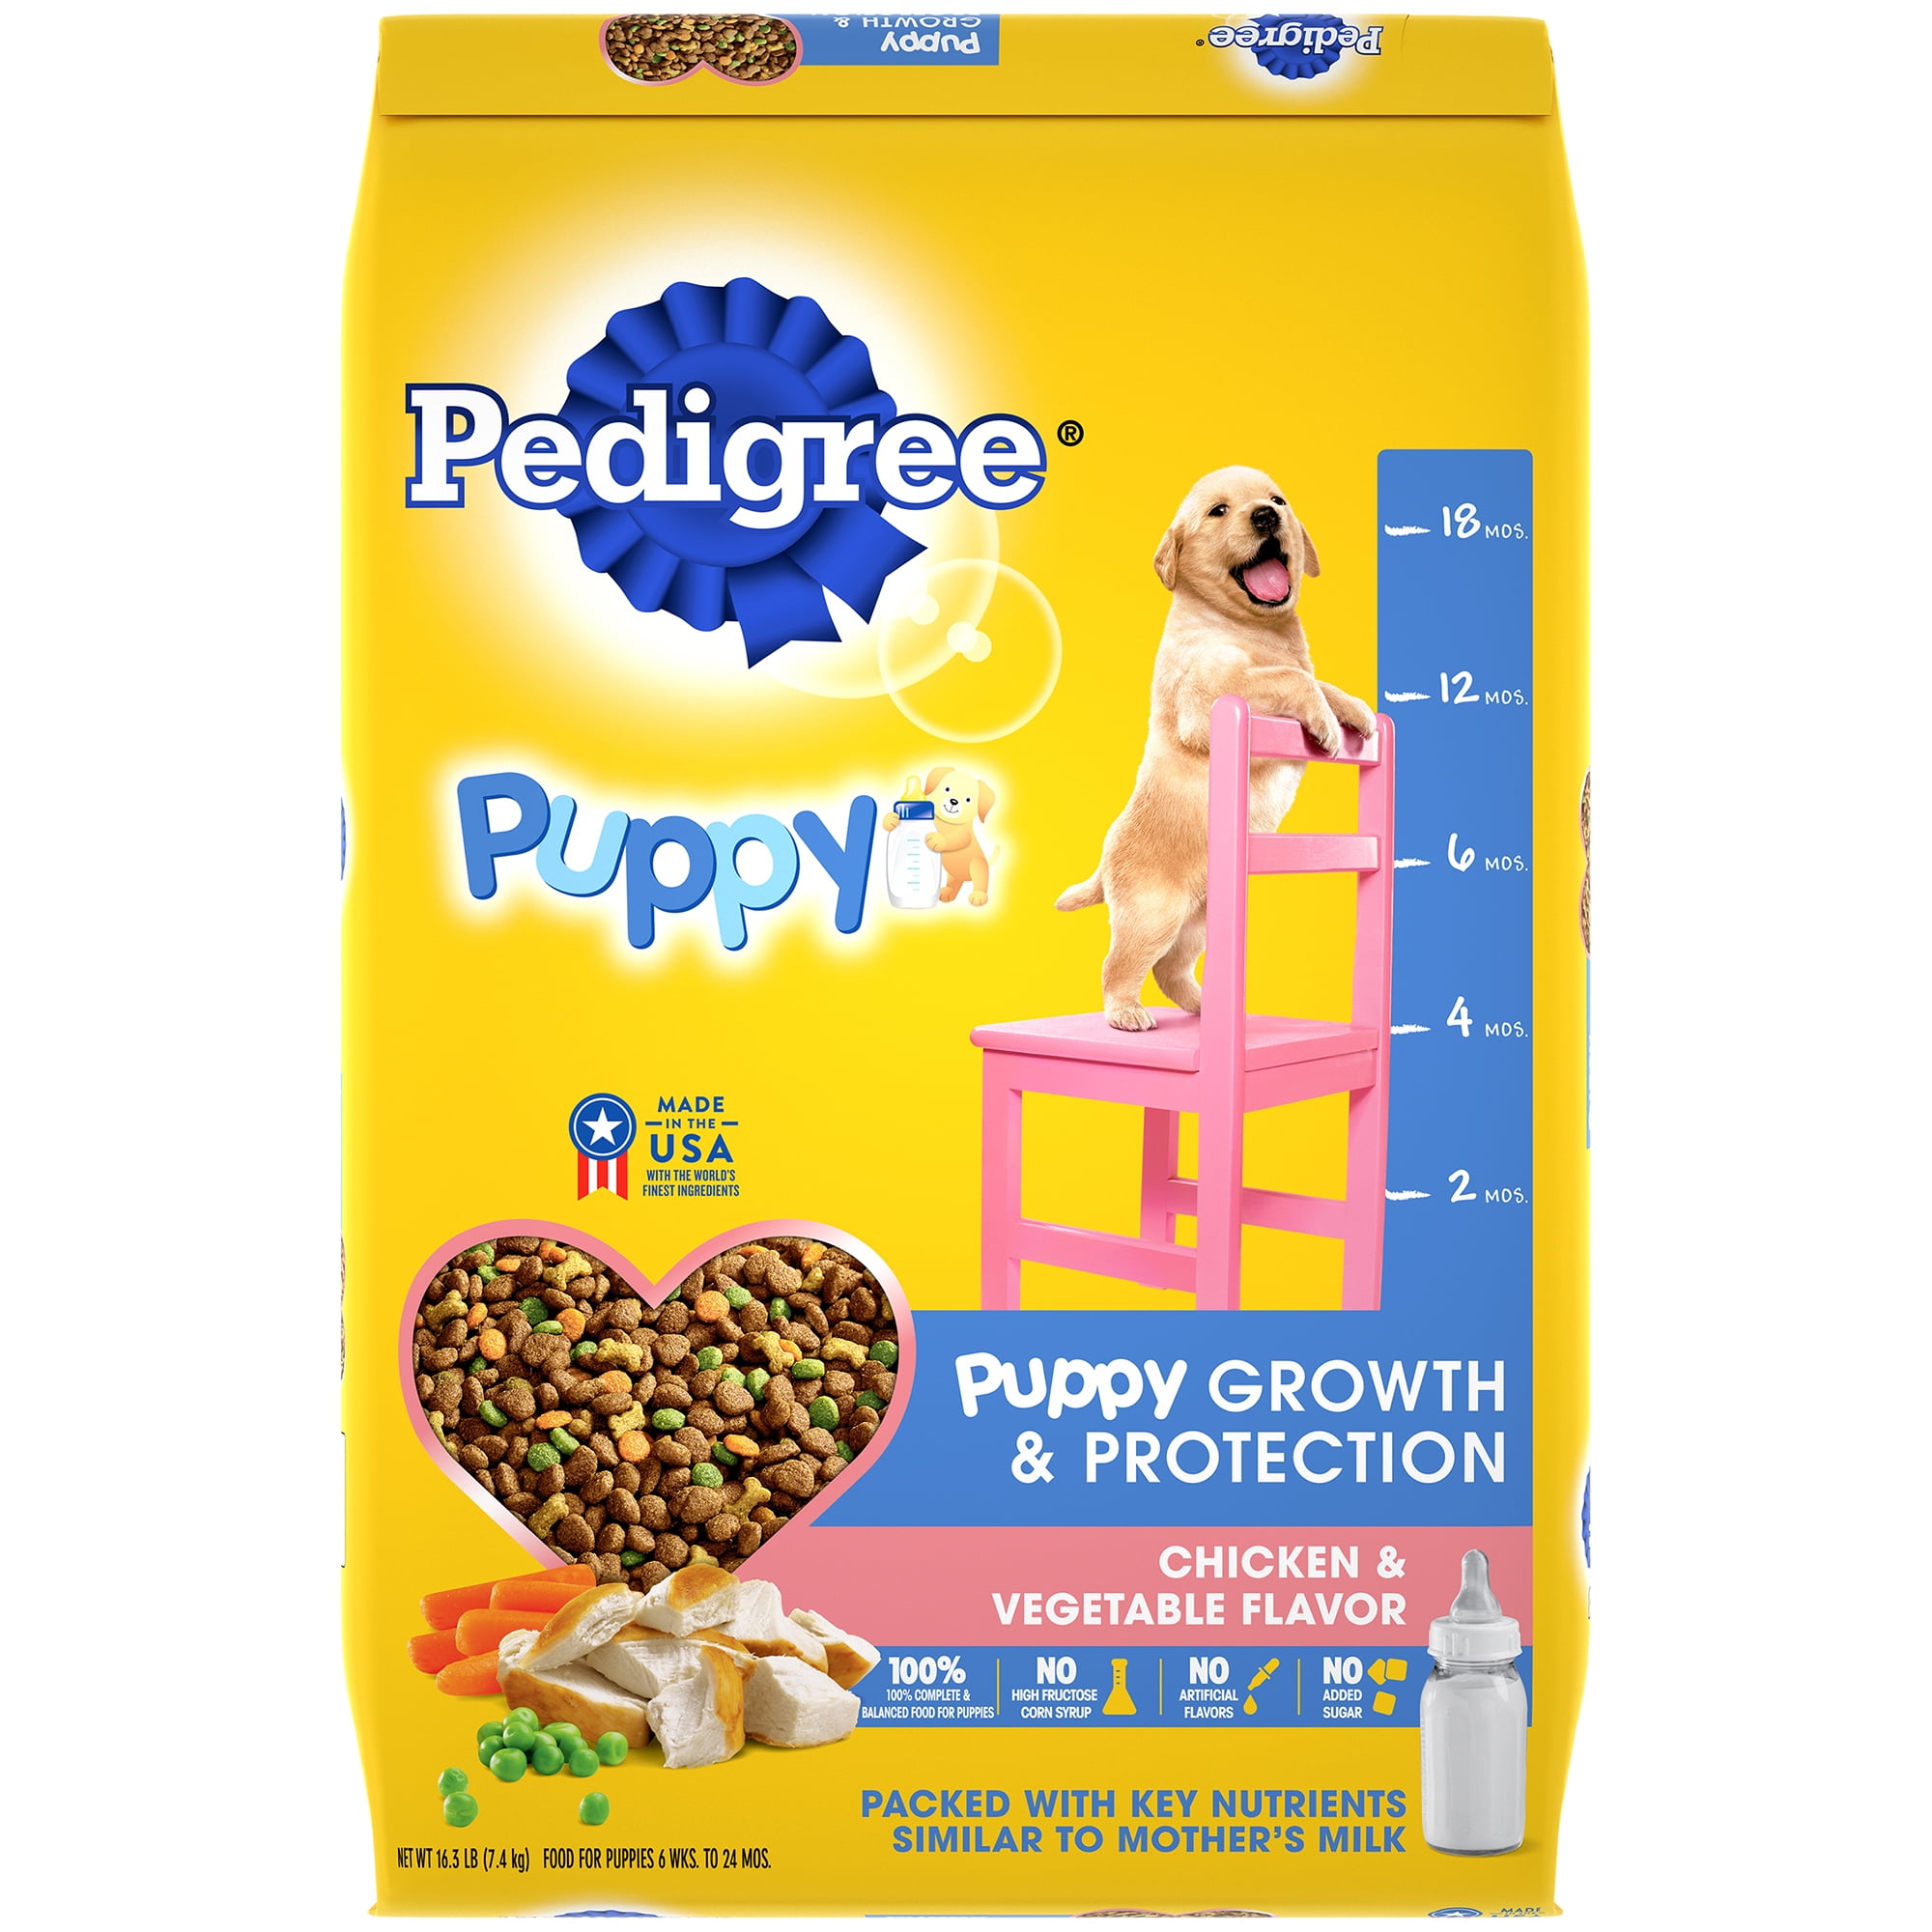 pedigree dog food cheapest price